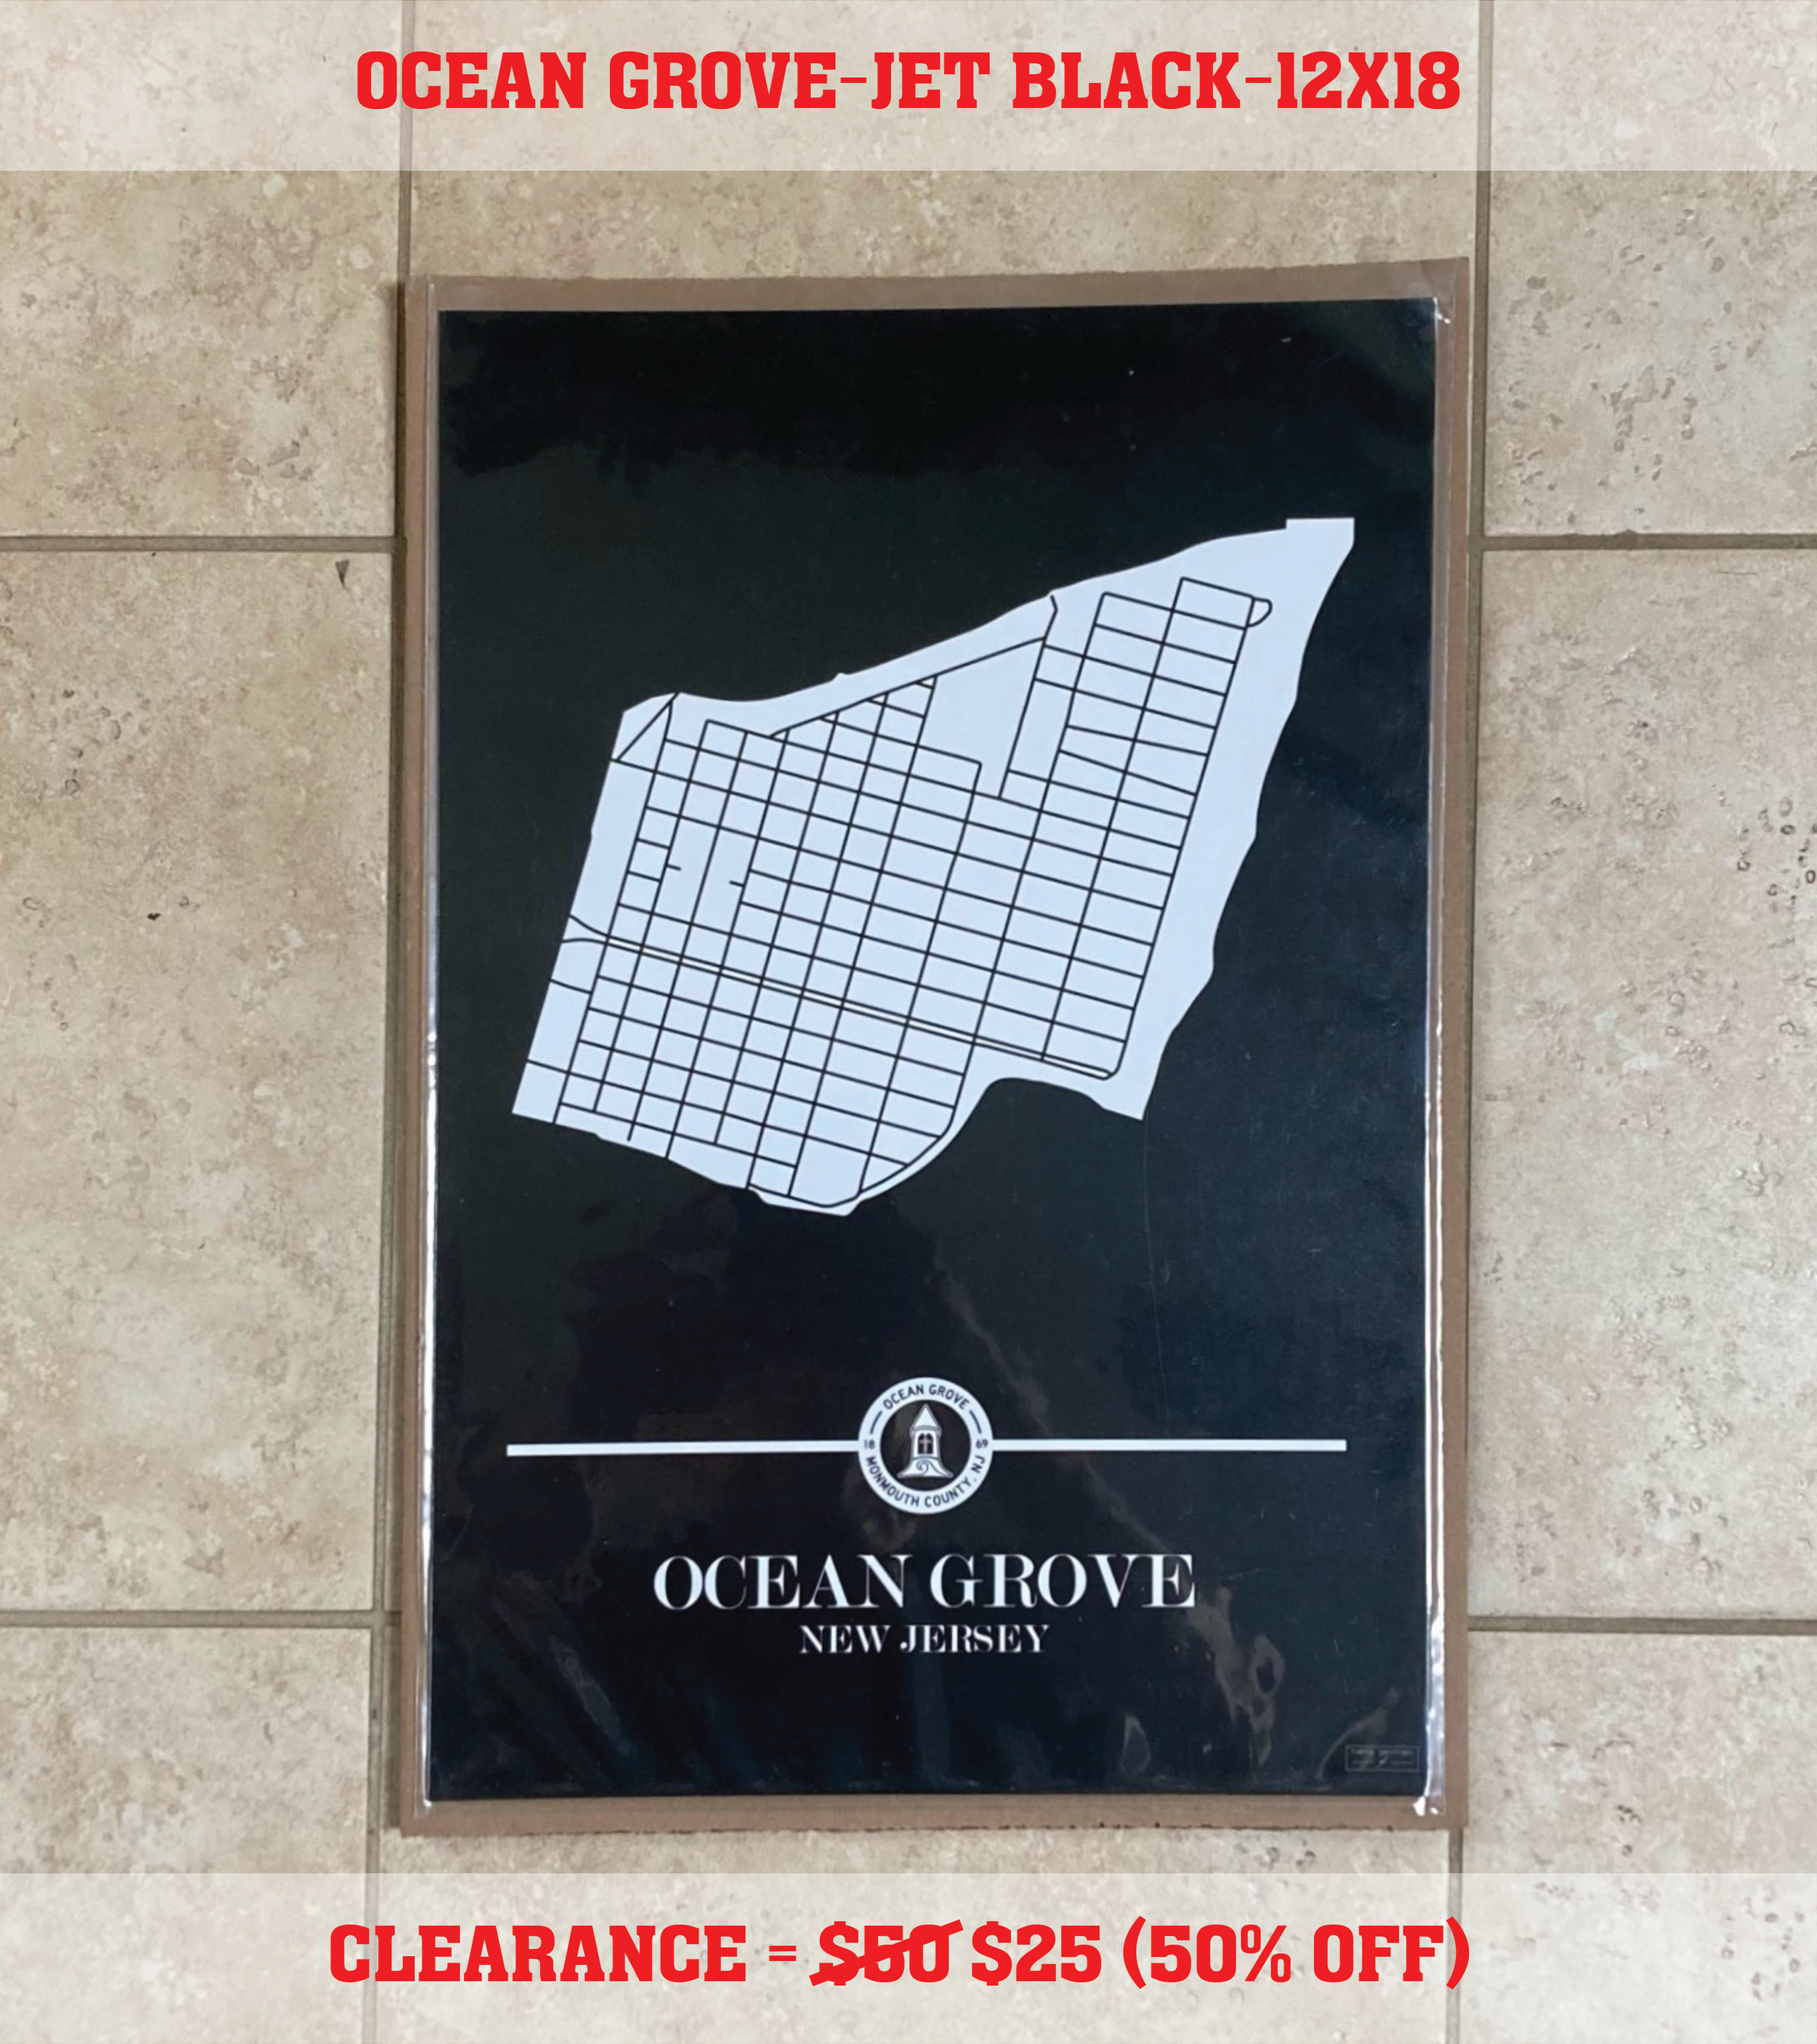 Ocean Grove (12x18) Jet Black